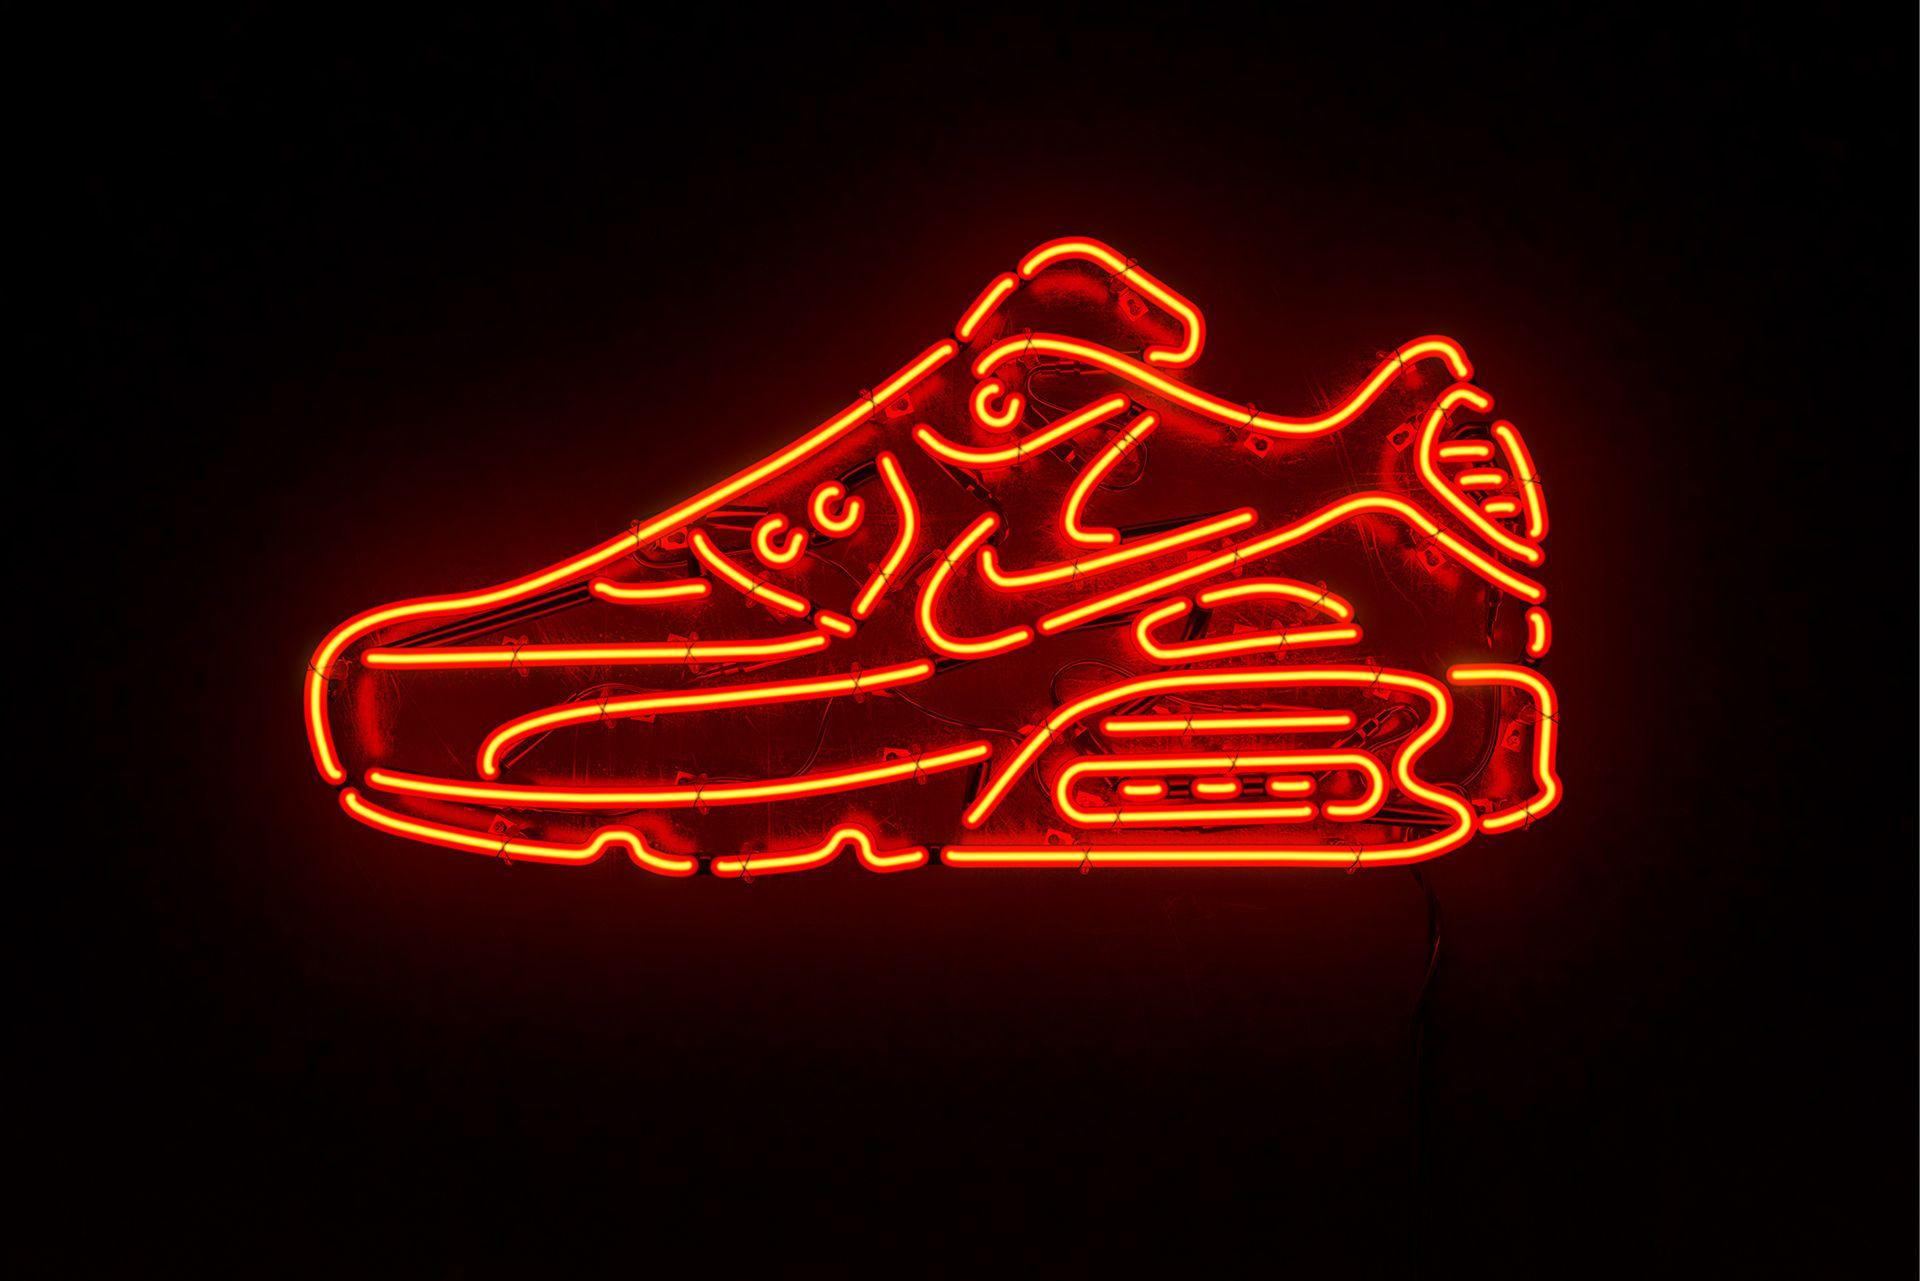 Nike Fire Logo - Nike Air Max 90 Neon 'On' by Rizon Parein | Agent Pekka